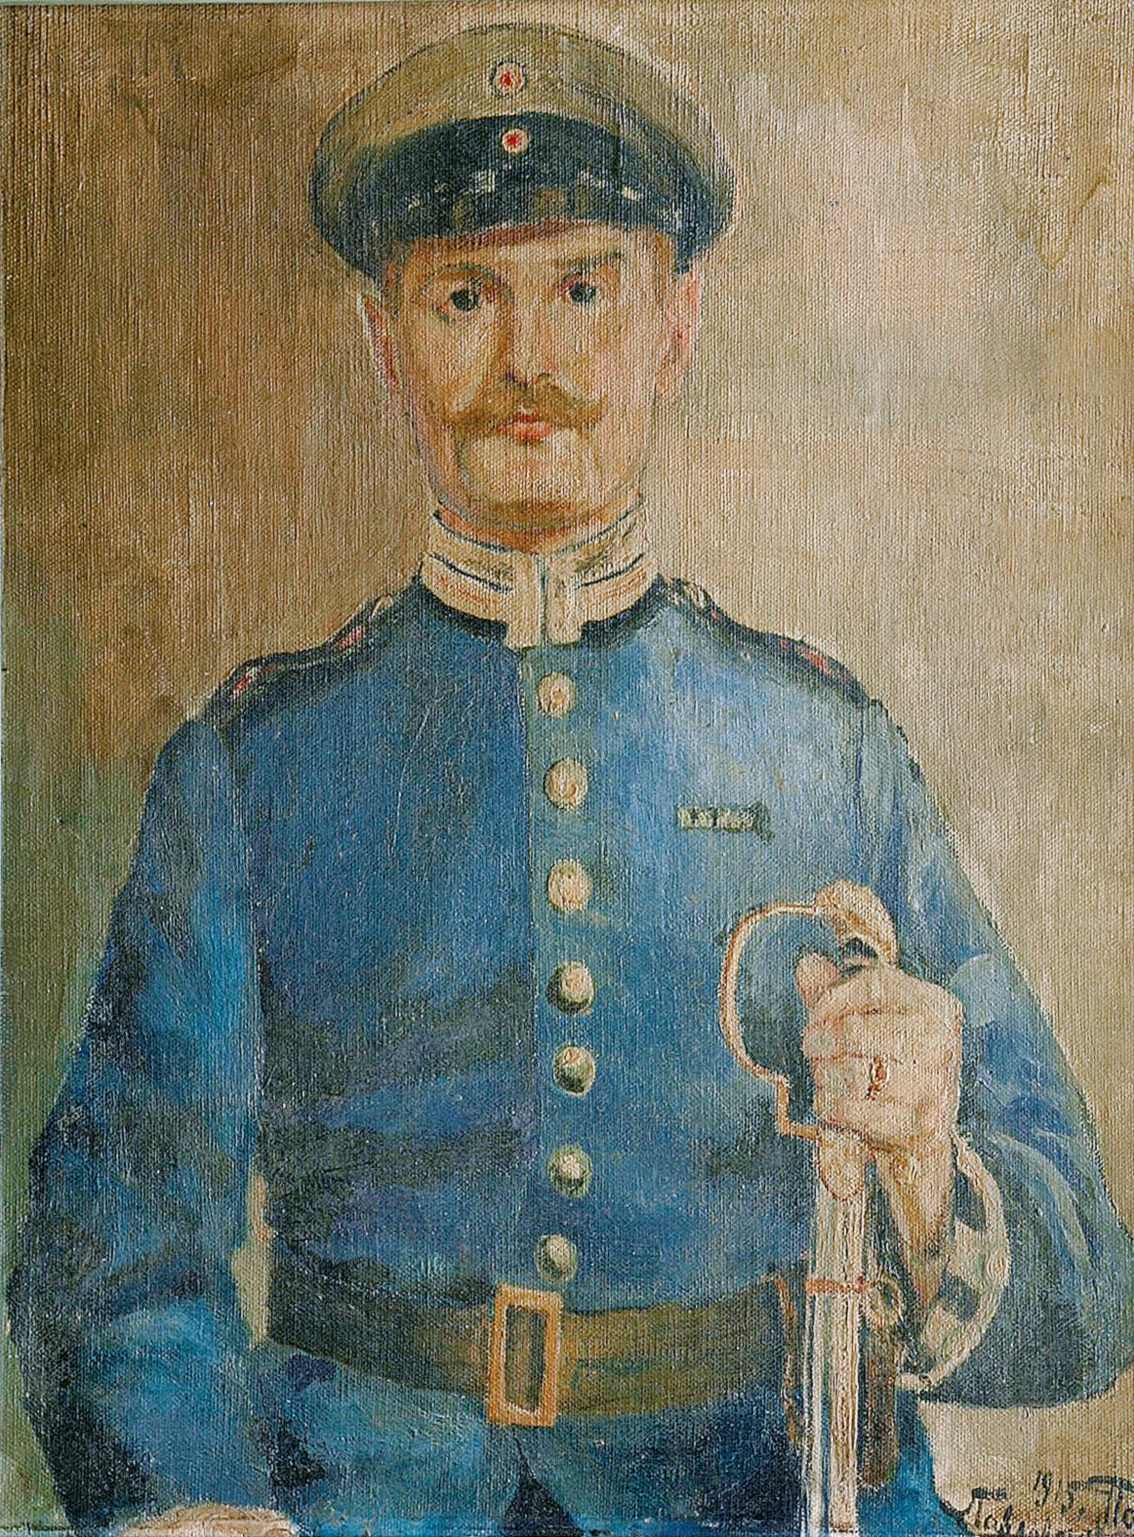 A tsarist officer